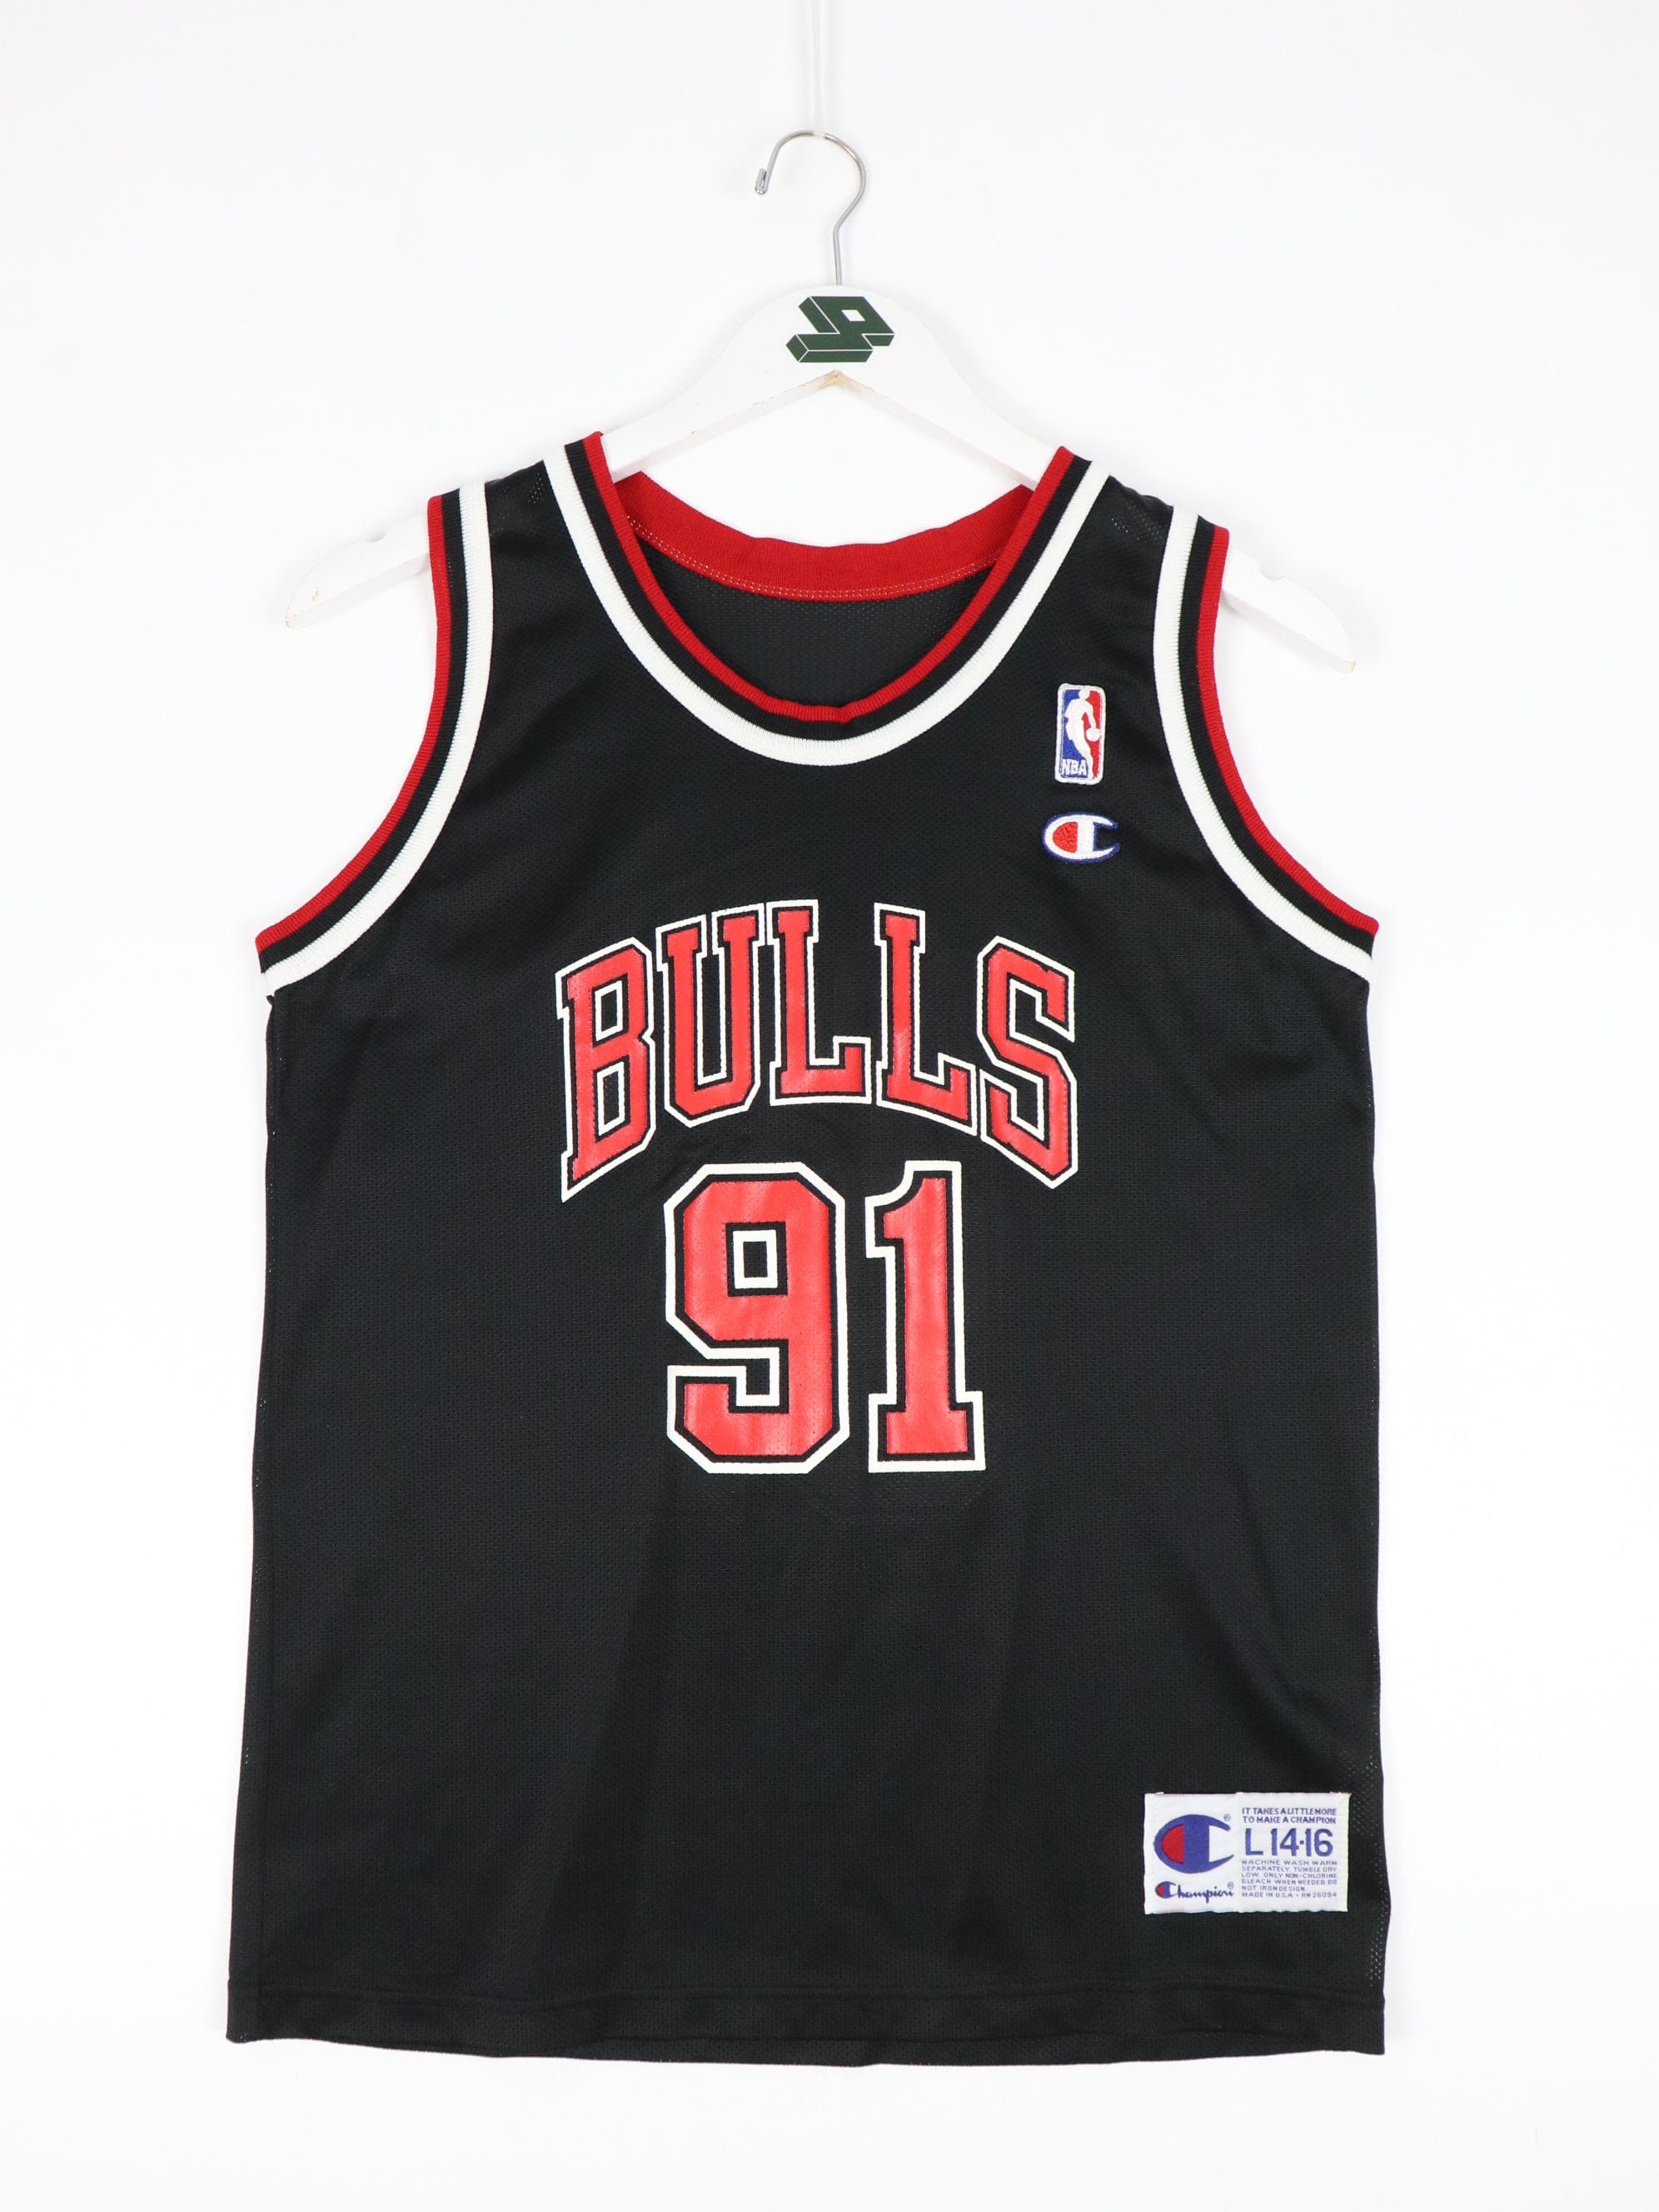 VTG 90S DENNIS Rodman Nike Tee T Shirt Size Xl madeIn USA NBA